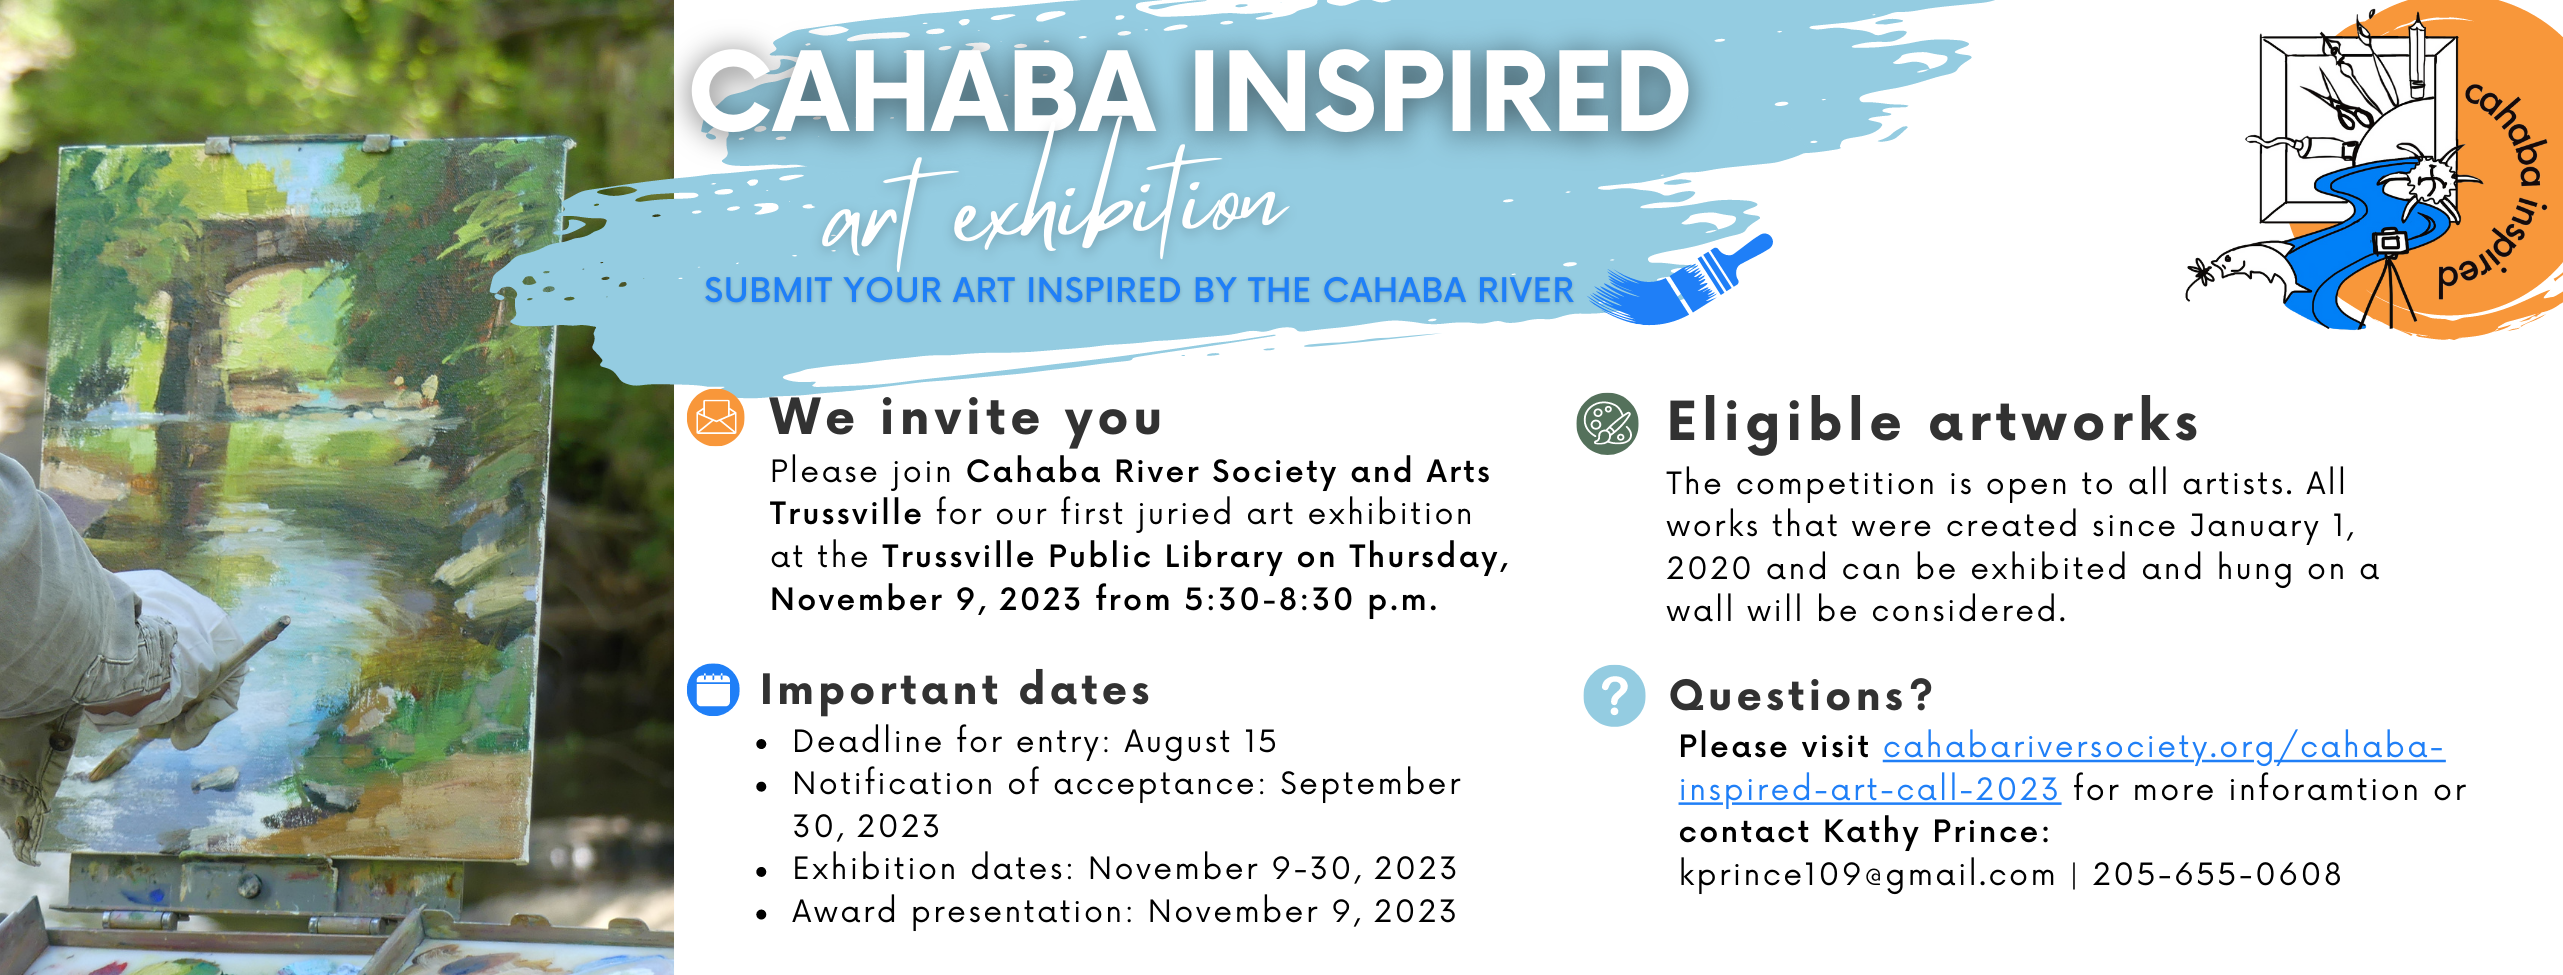 Cahaba Inspired Art Exhibition web banner